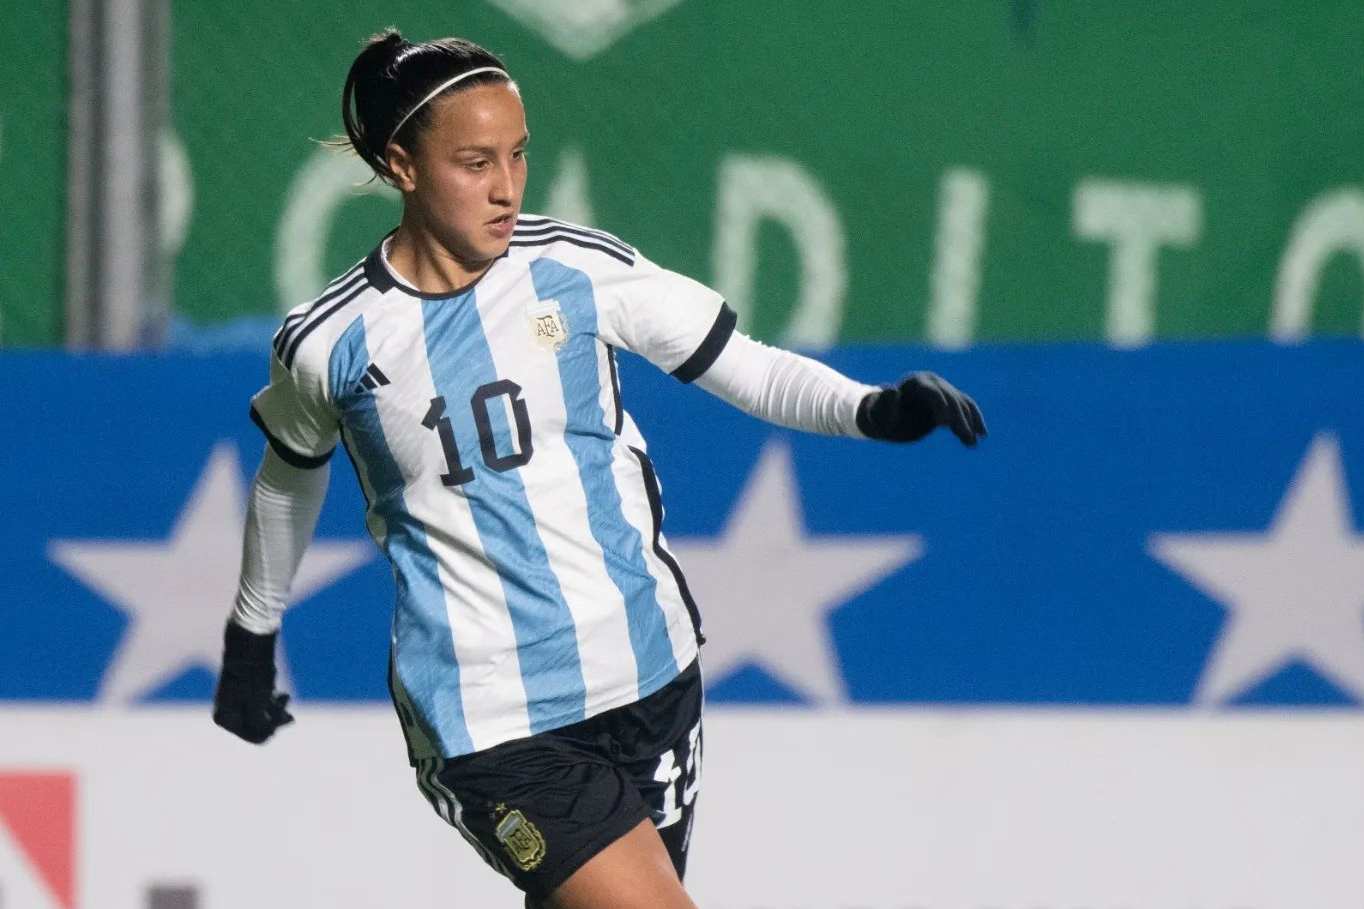 Aposte na Argentina na Copa do Mundo Feminina - Foto: Facebook.com/AFASeleccionArgentina